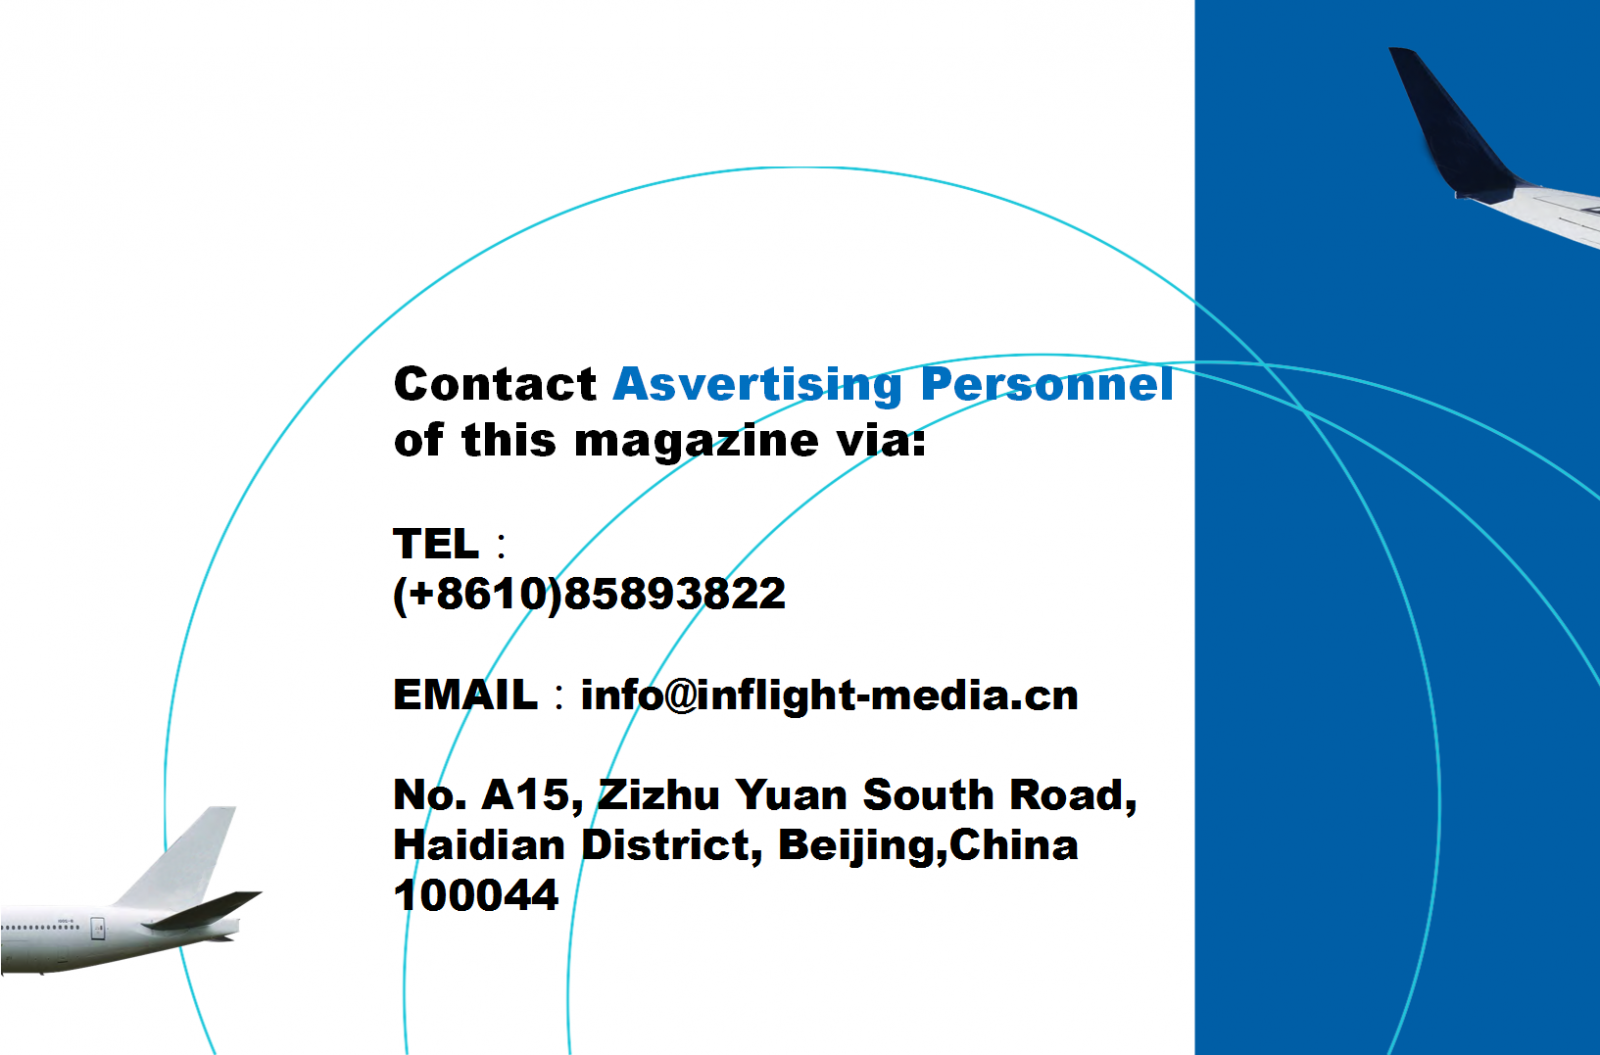 Xiamen Airlines inflight media